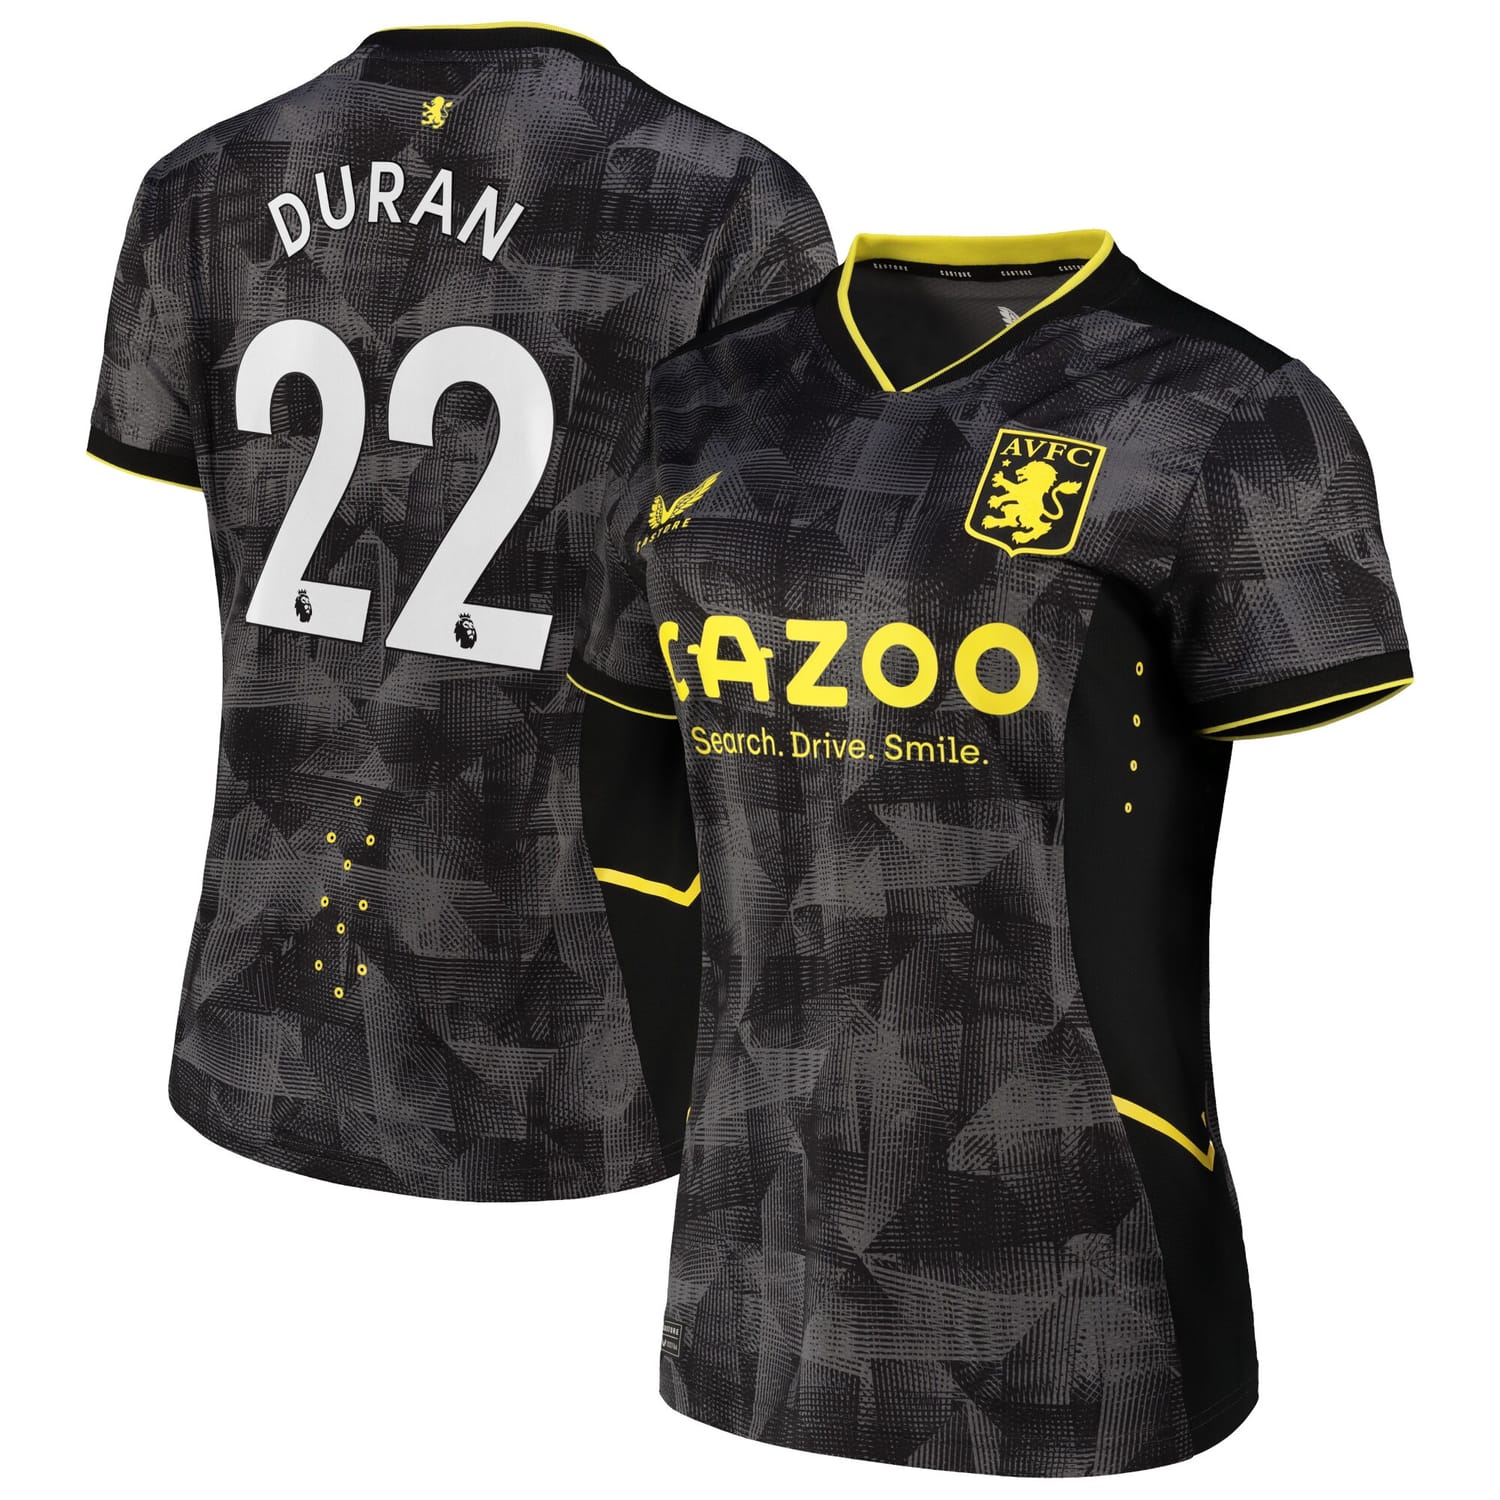 Premier League Aston Villa Third Pro Jersey Shirt 2022-23 player Duran 22 printing for Women